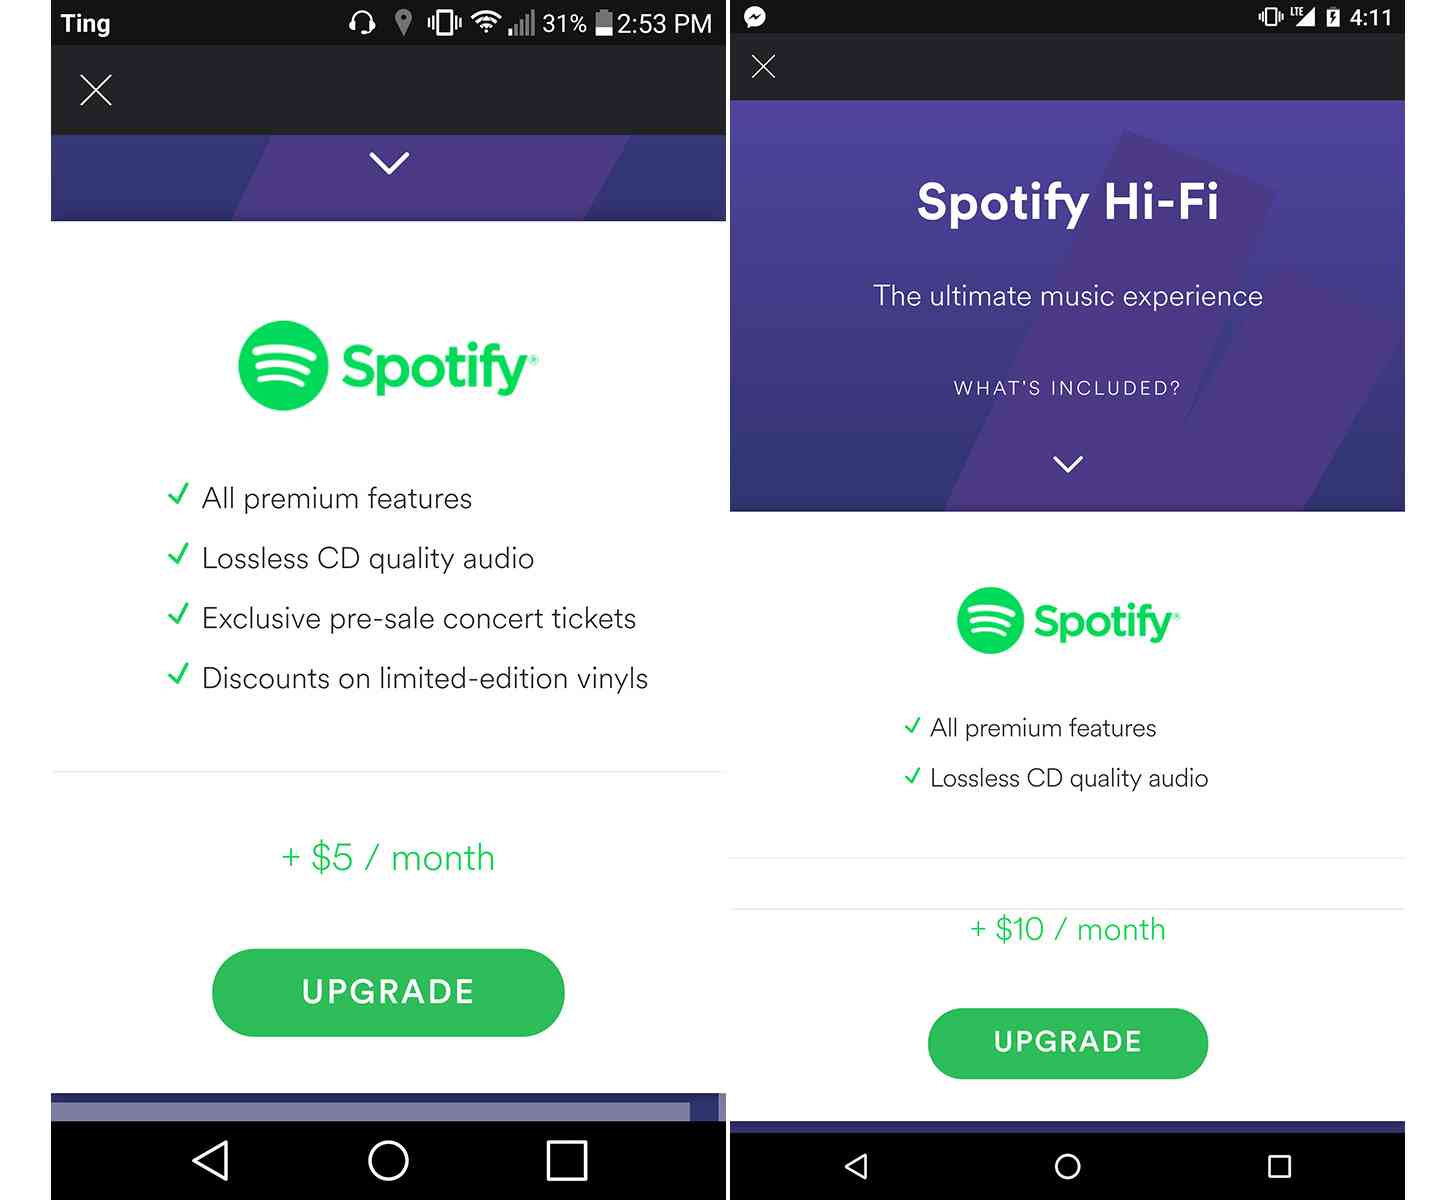 Spotify Hi-Fi streaming